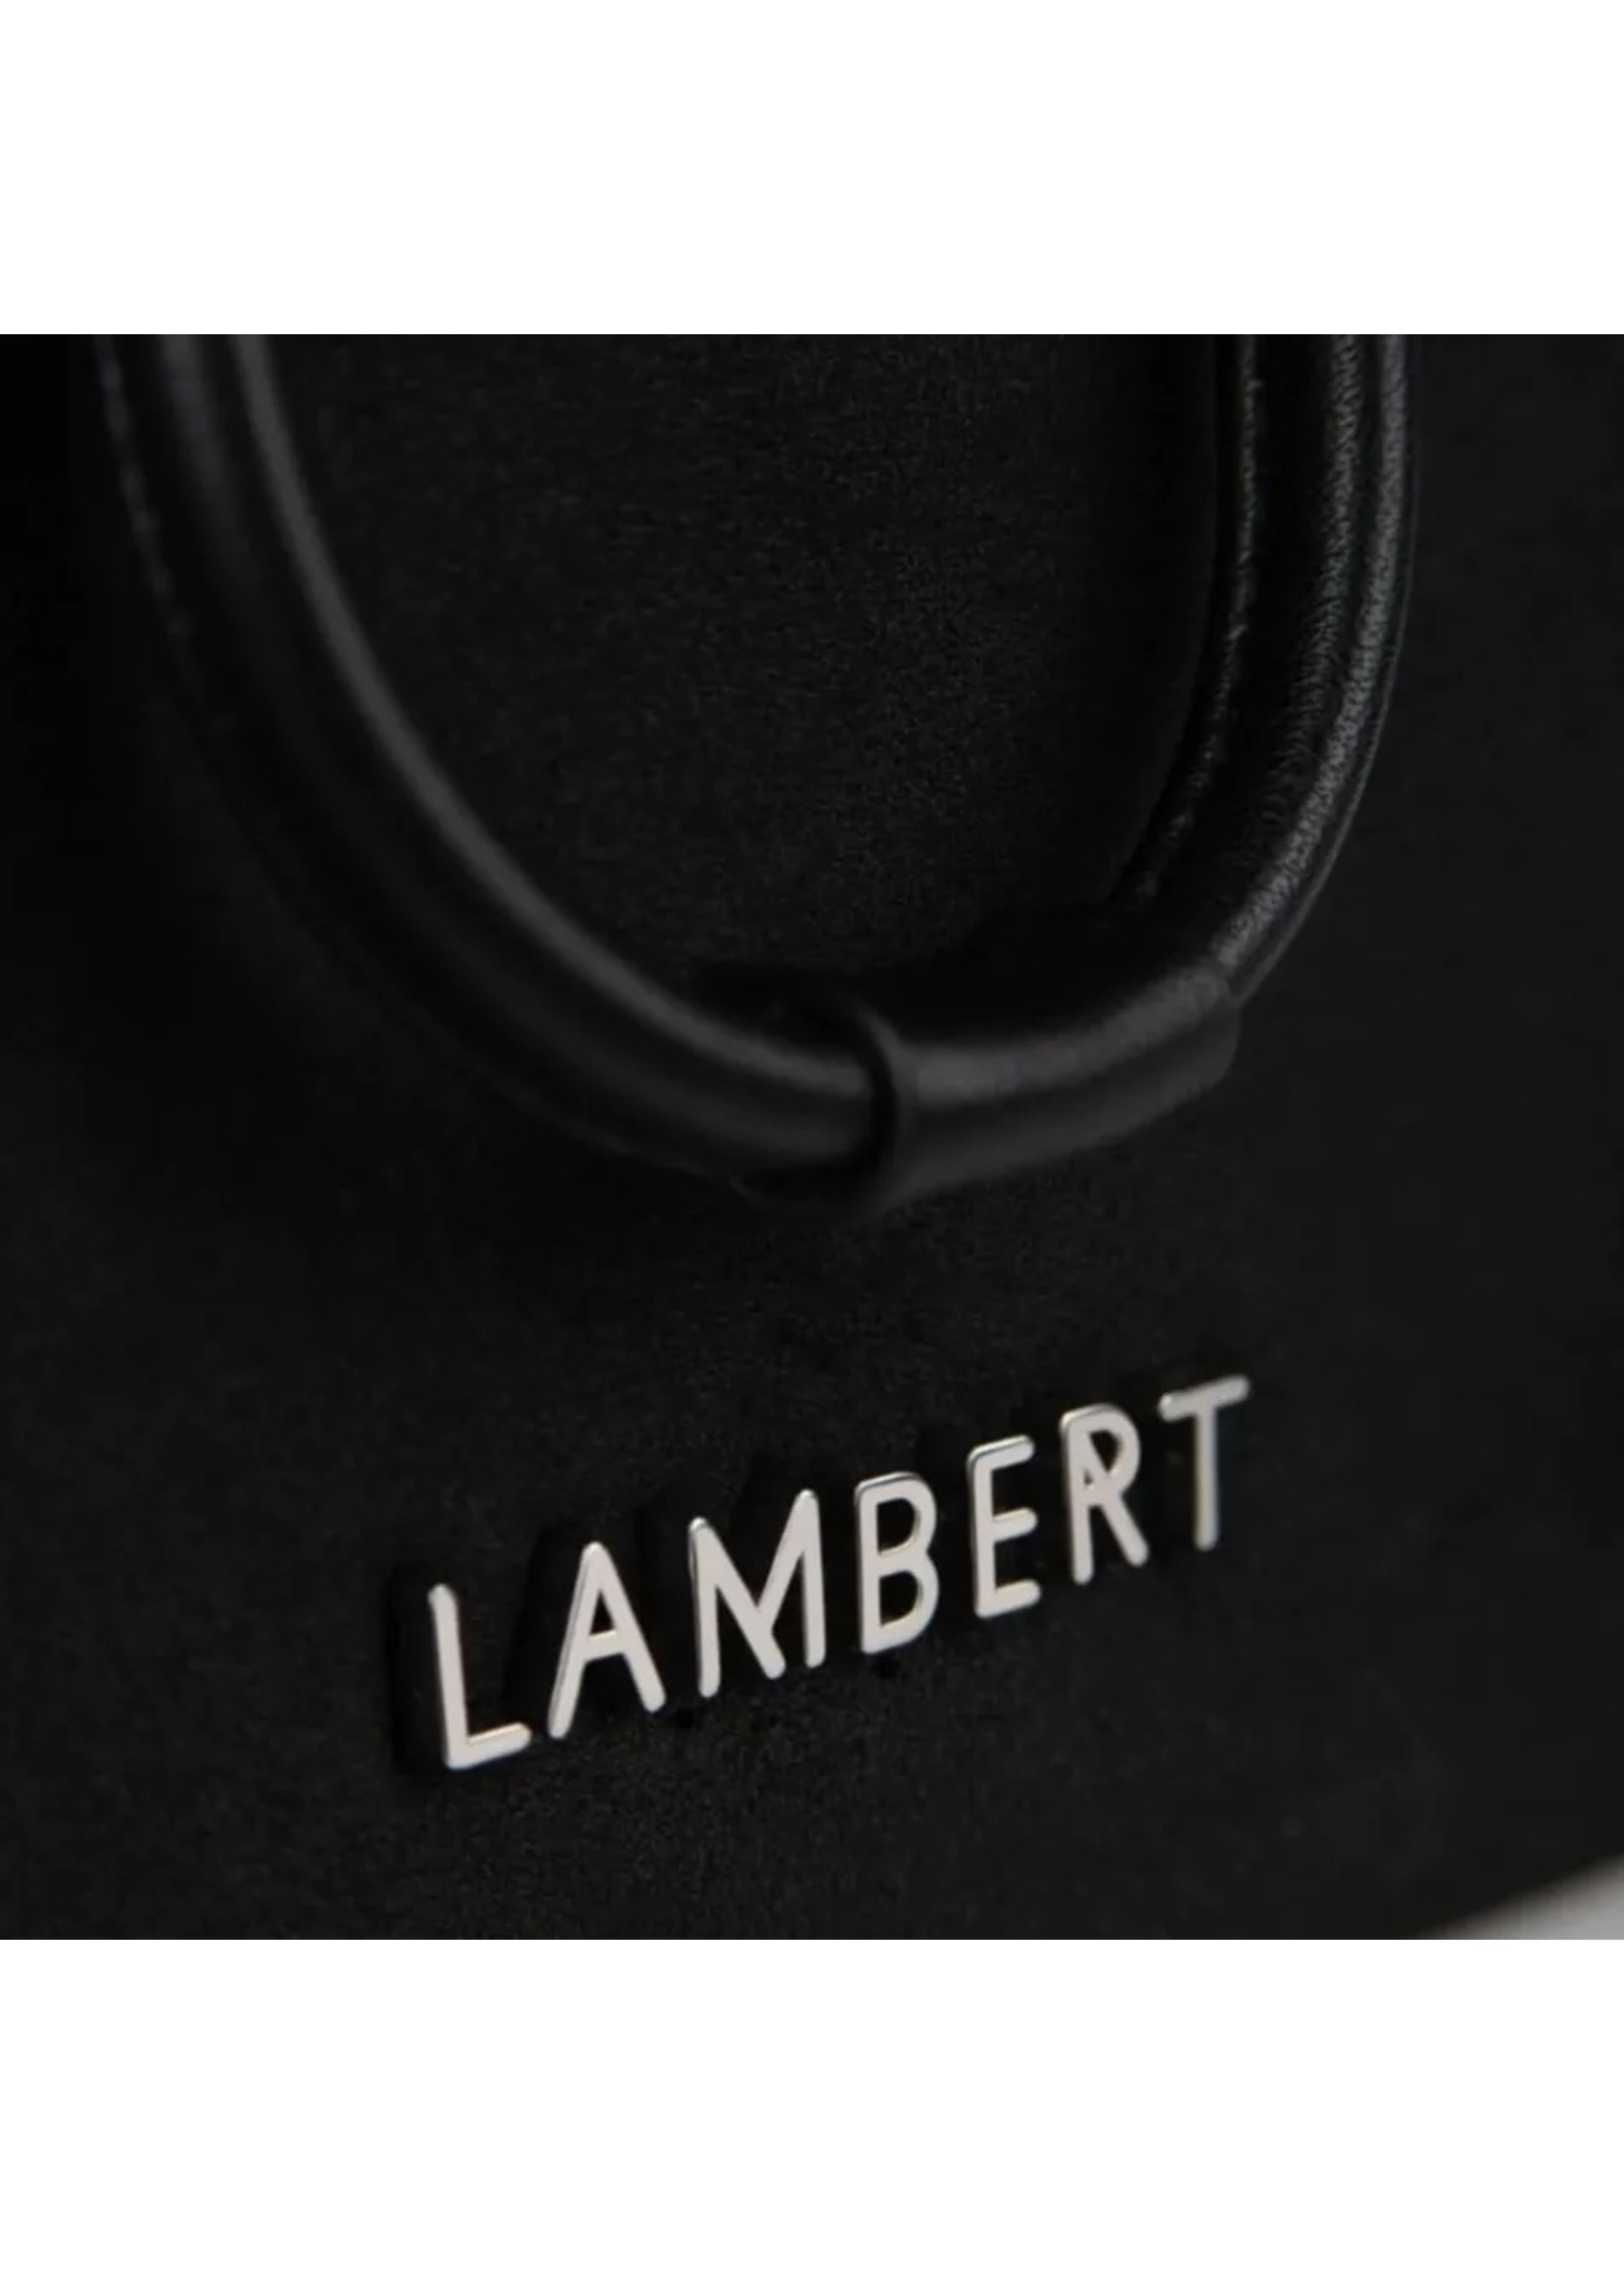 Lambert Lambert Camilla Suede Bucket Bag